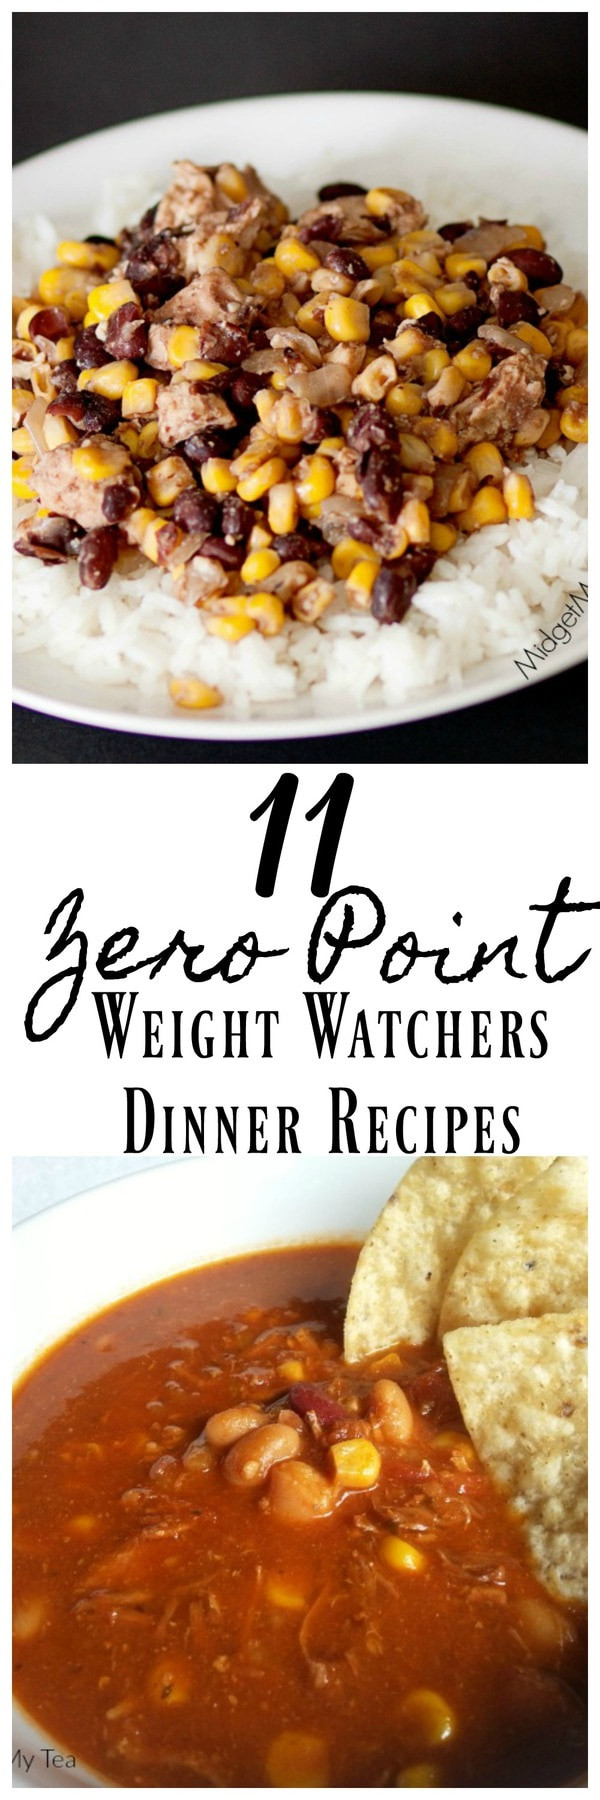 Weight Watcher Dinner Recipes
 11 Zero Point Weight Watchers Dinner Recipes • Mid Momma